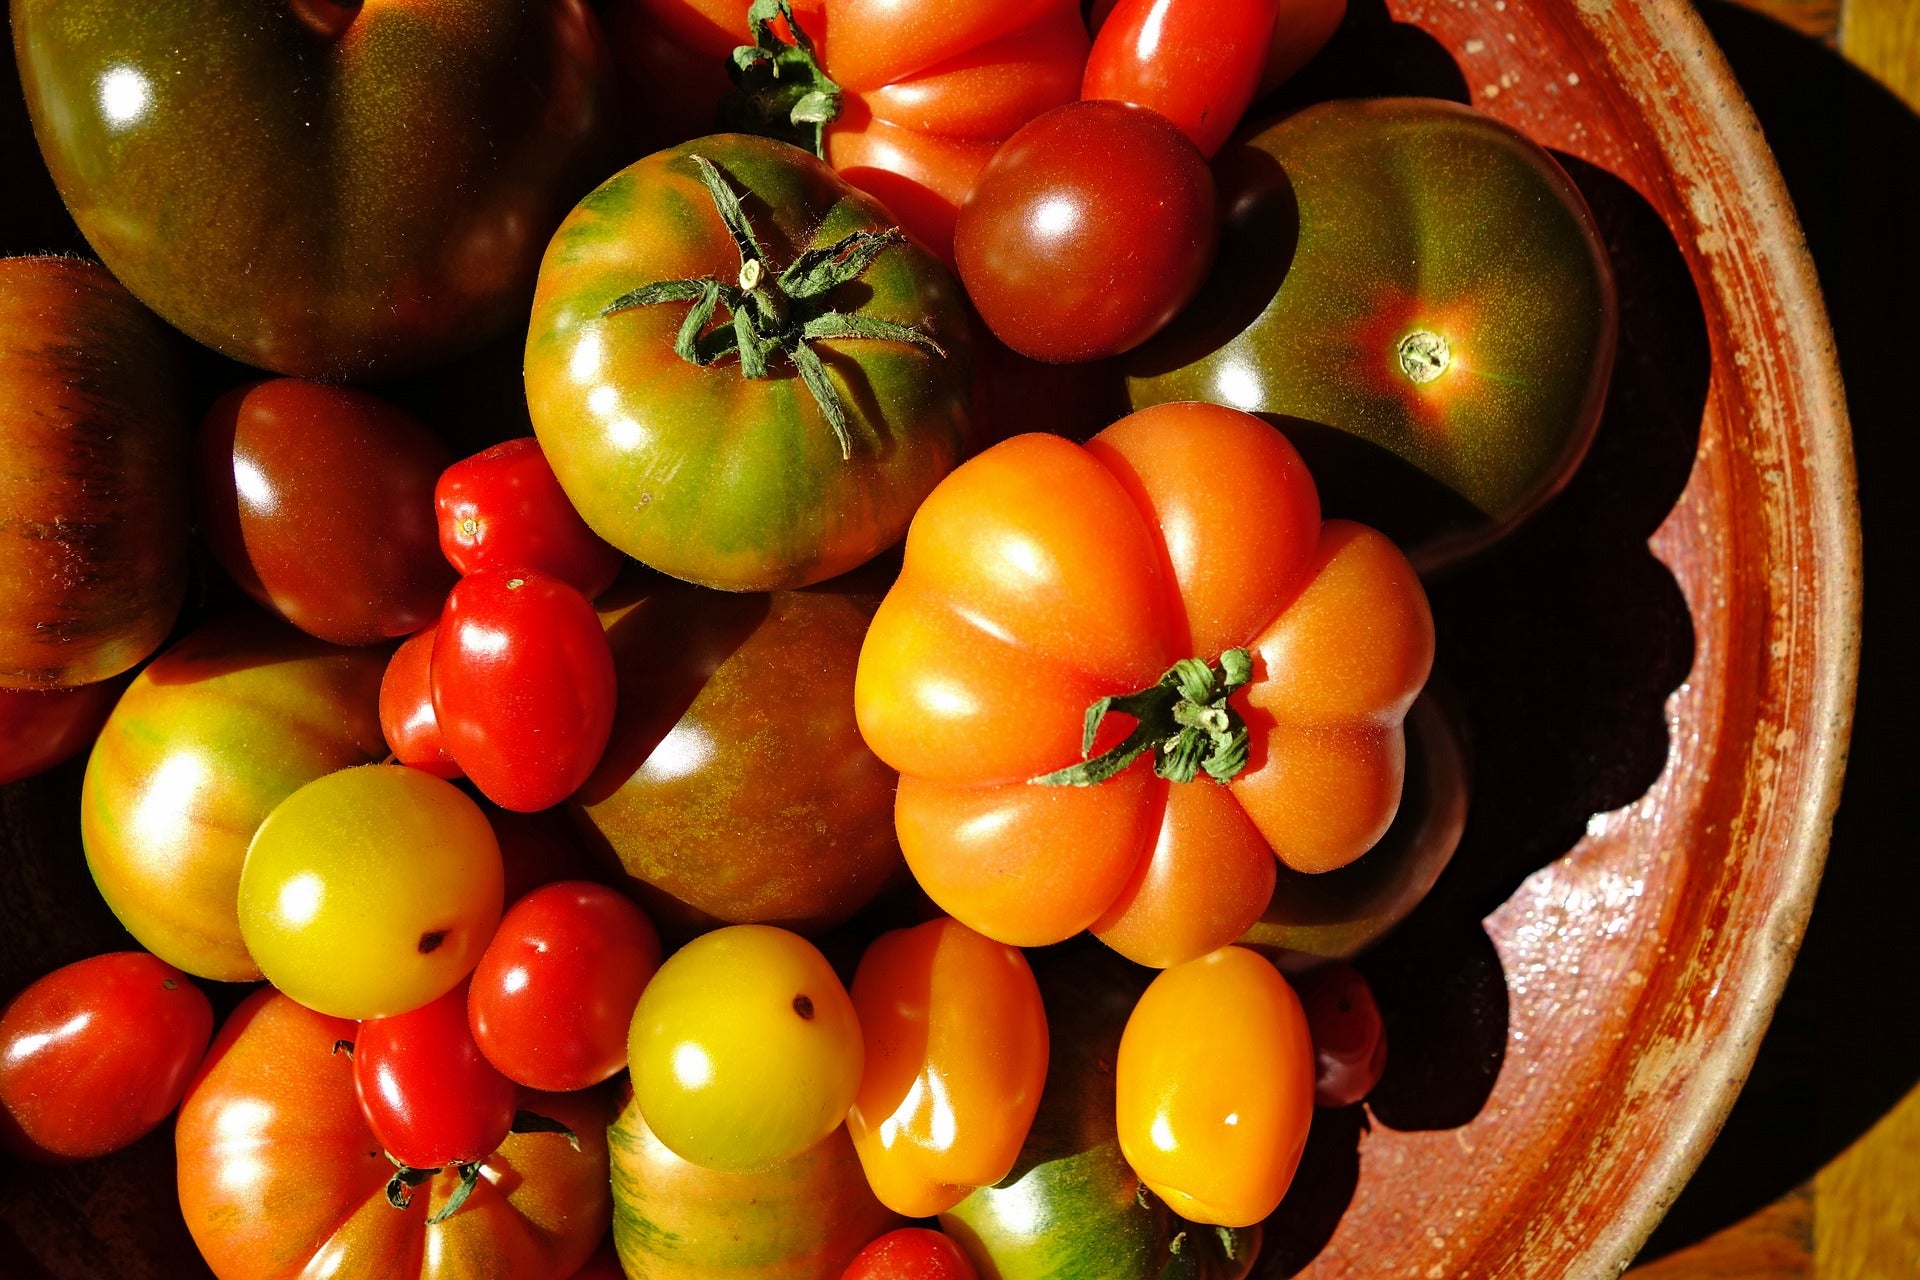 Slicer Tomato at Whole Foods Market